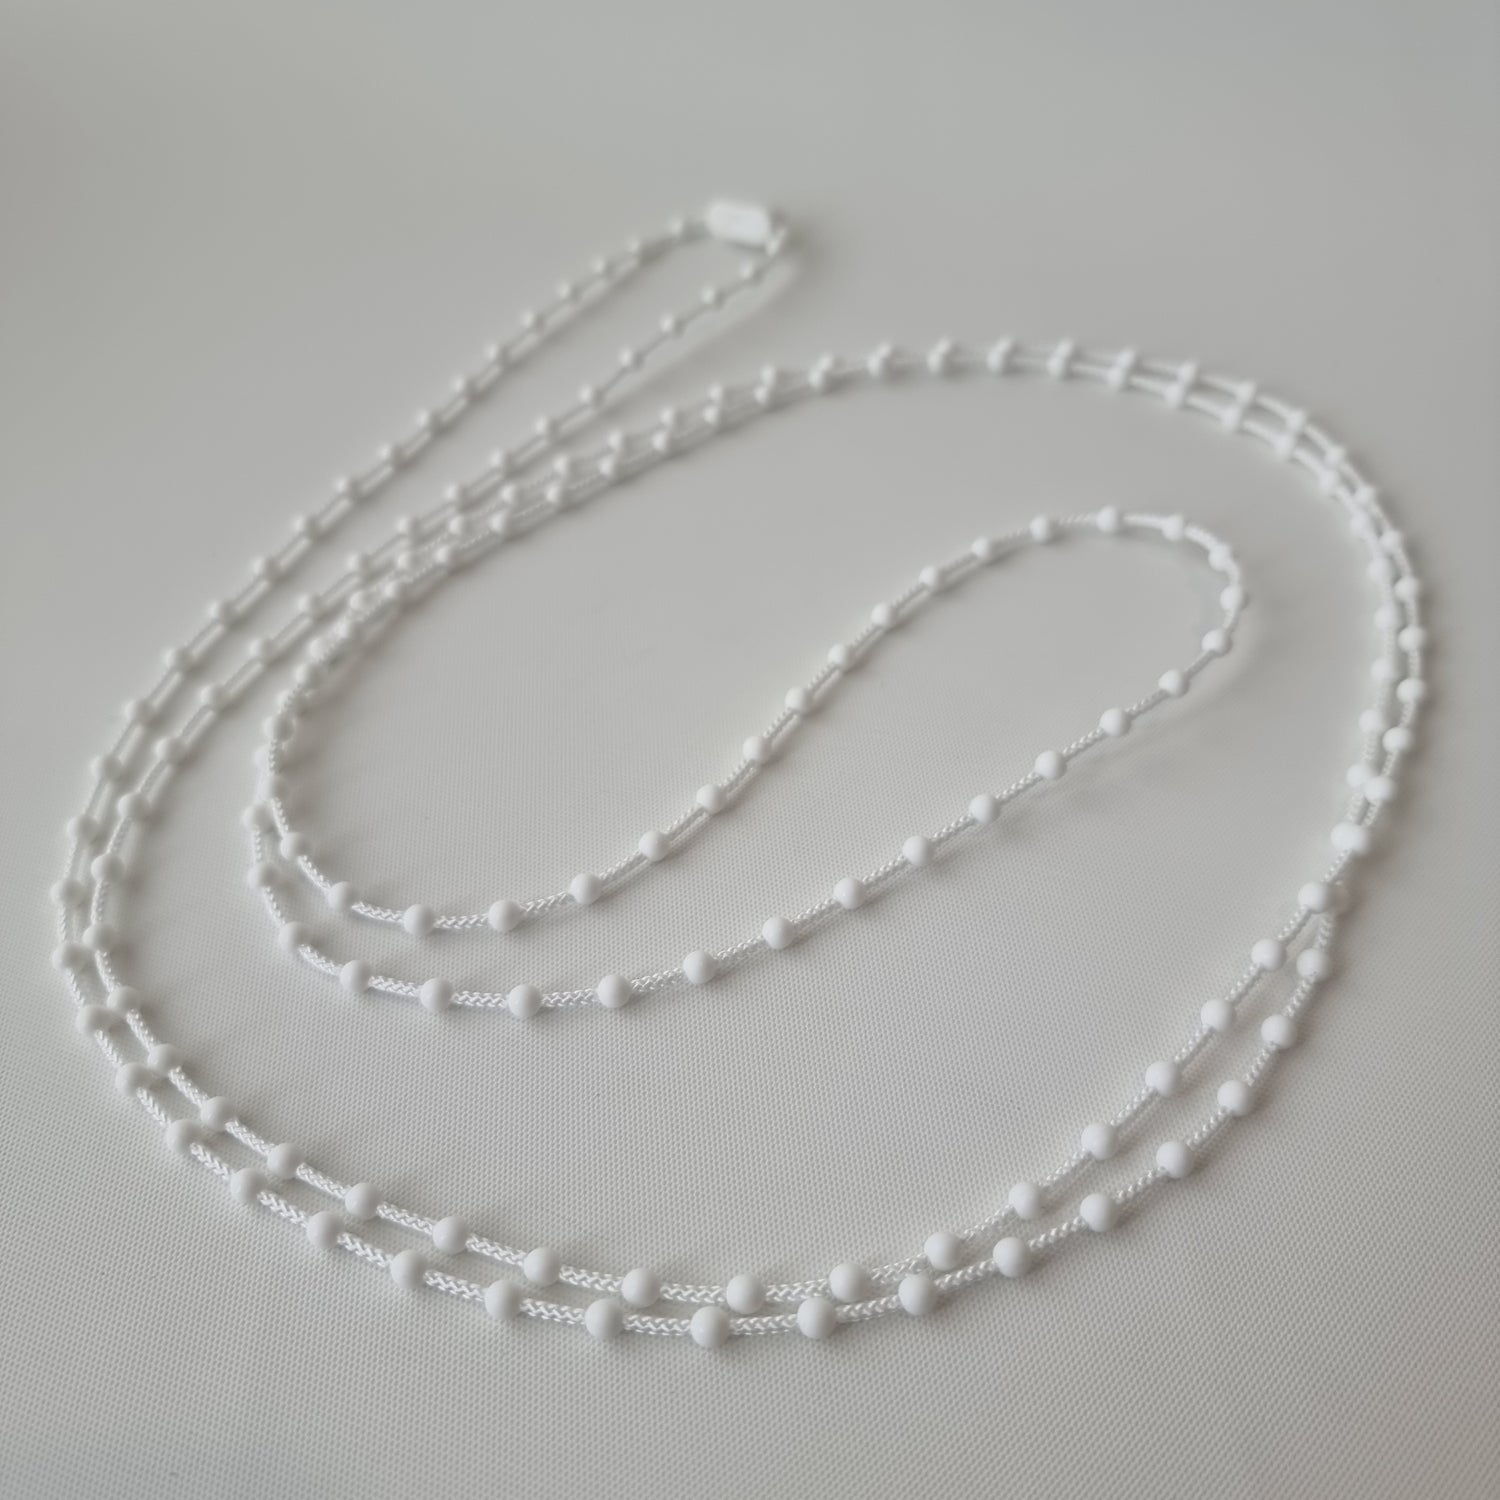 Vertical Blind control chain - white 5m